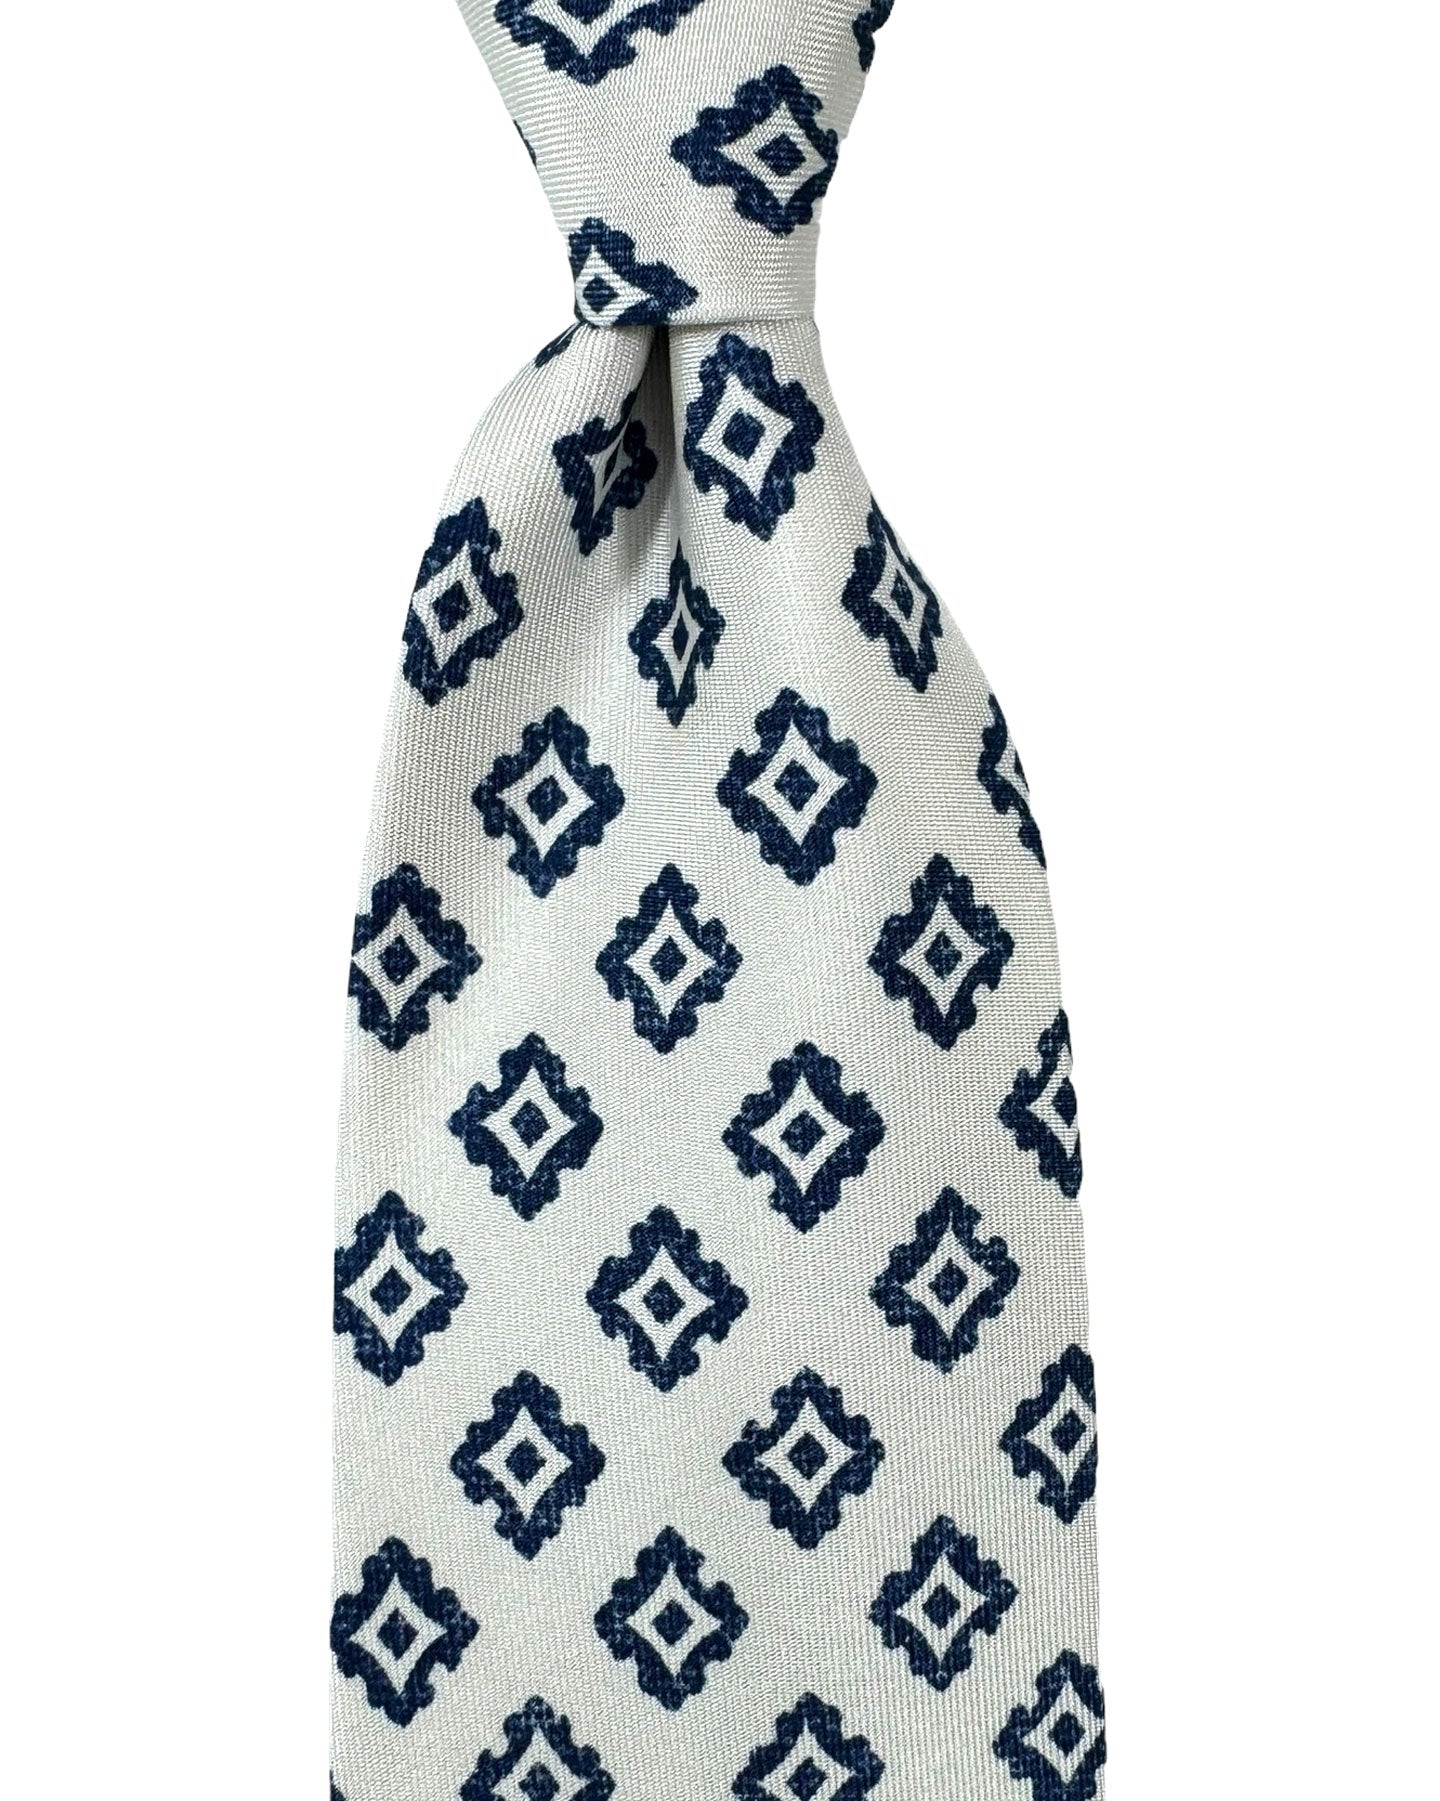 Barba Sevenfold Tie White Navy Medallions Design - Sartorial Neckwear